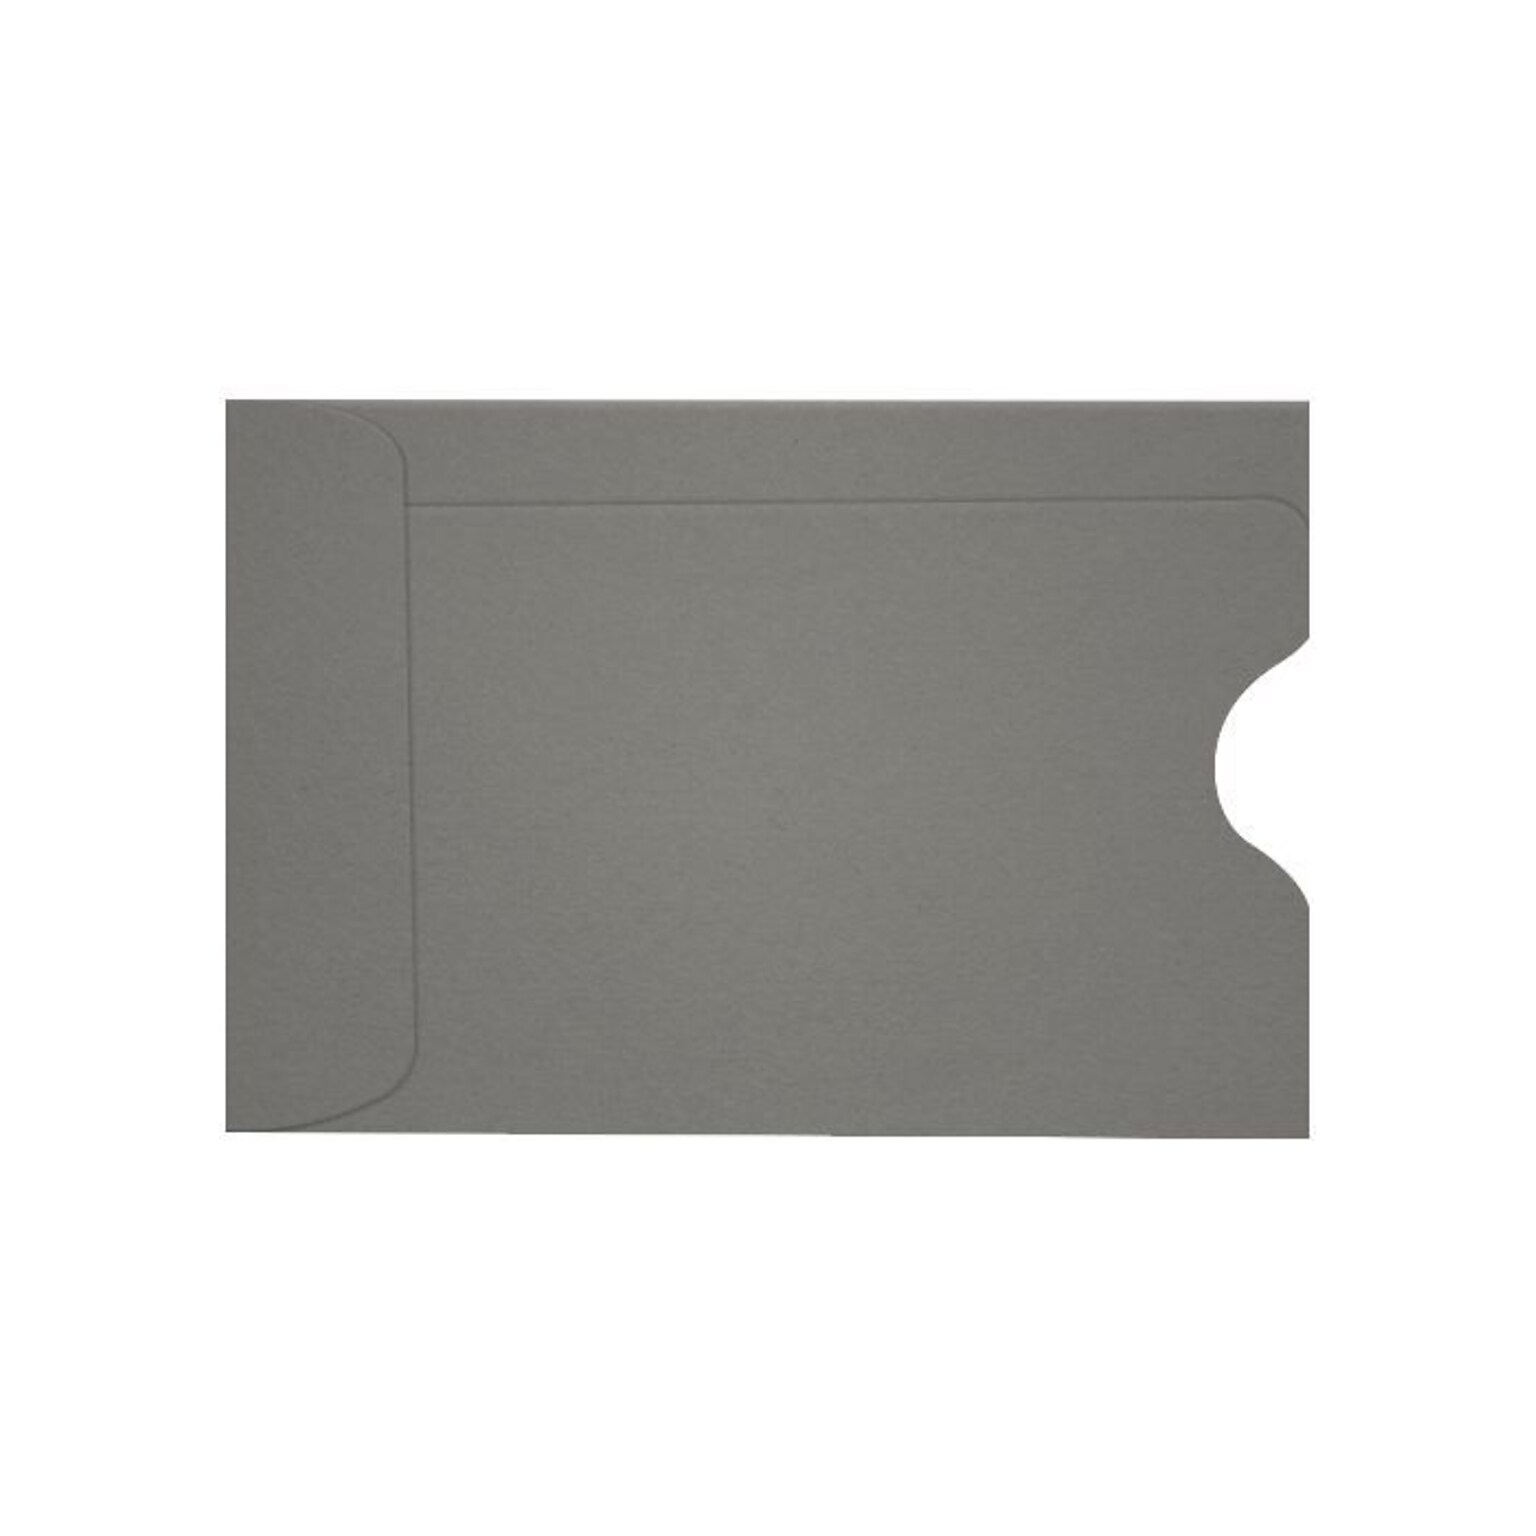 LUX Credit Card Sleeve 2 3/8 x 3 1/2, 1000/Box, Smoke (LUX-1801-22-1M)